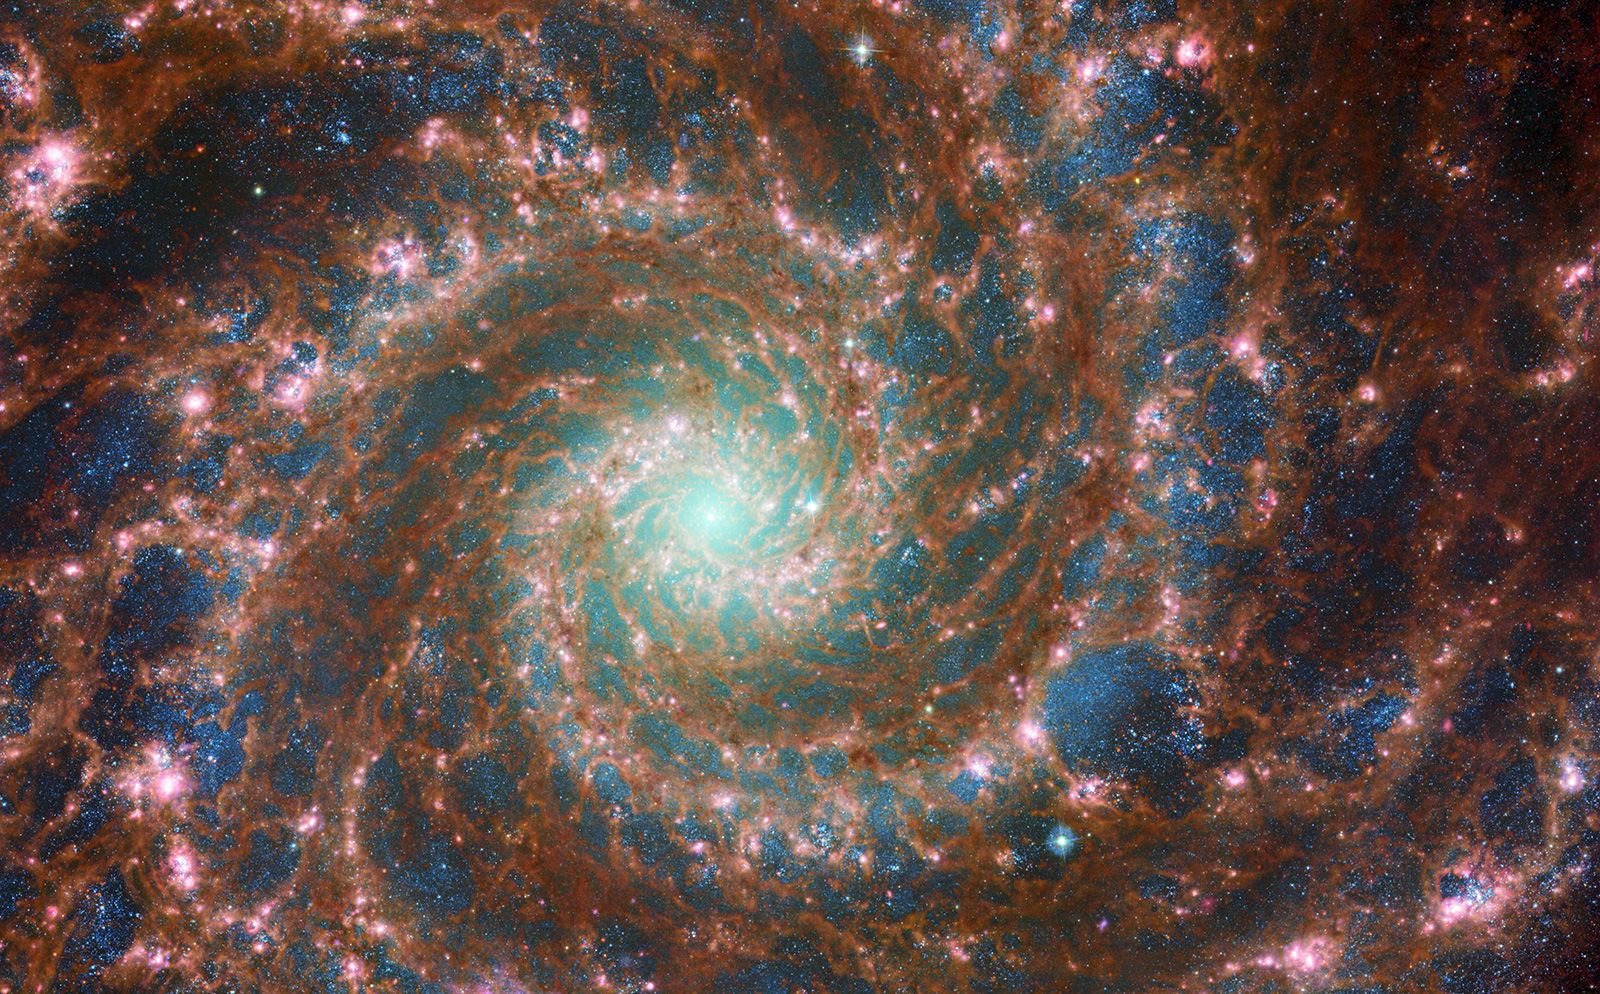 https://media.cnn.com/api/v1/images/stellar/prod/220830110946-james-webb-telescope-phantom-galaxy.jpg?c=original